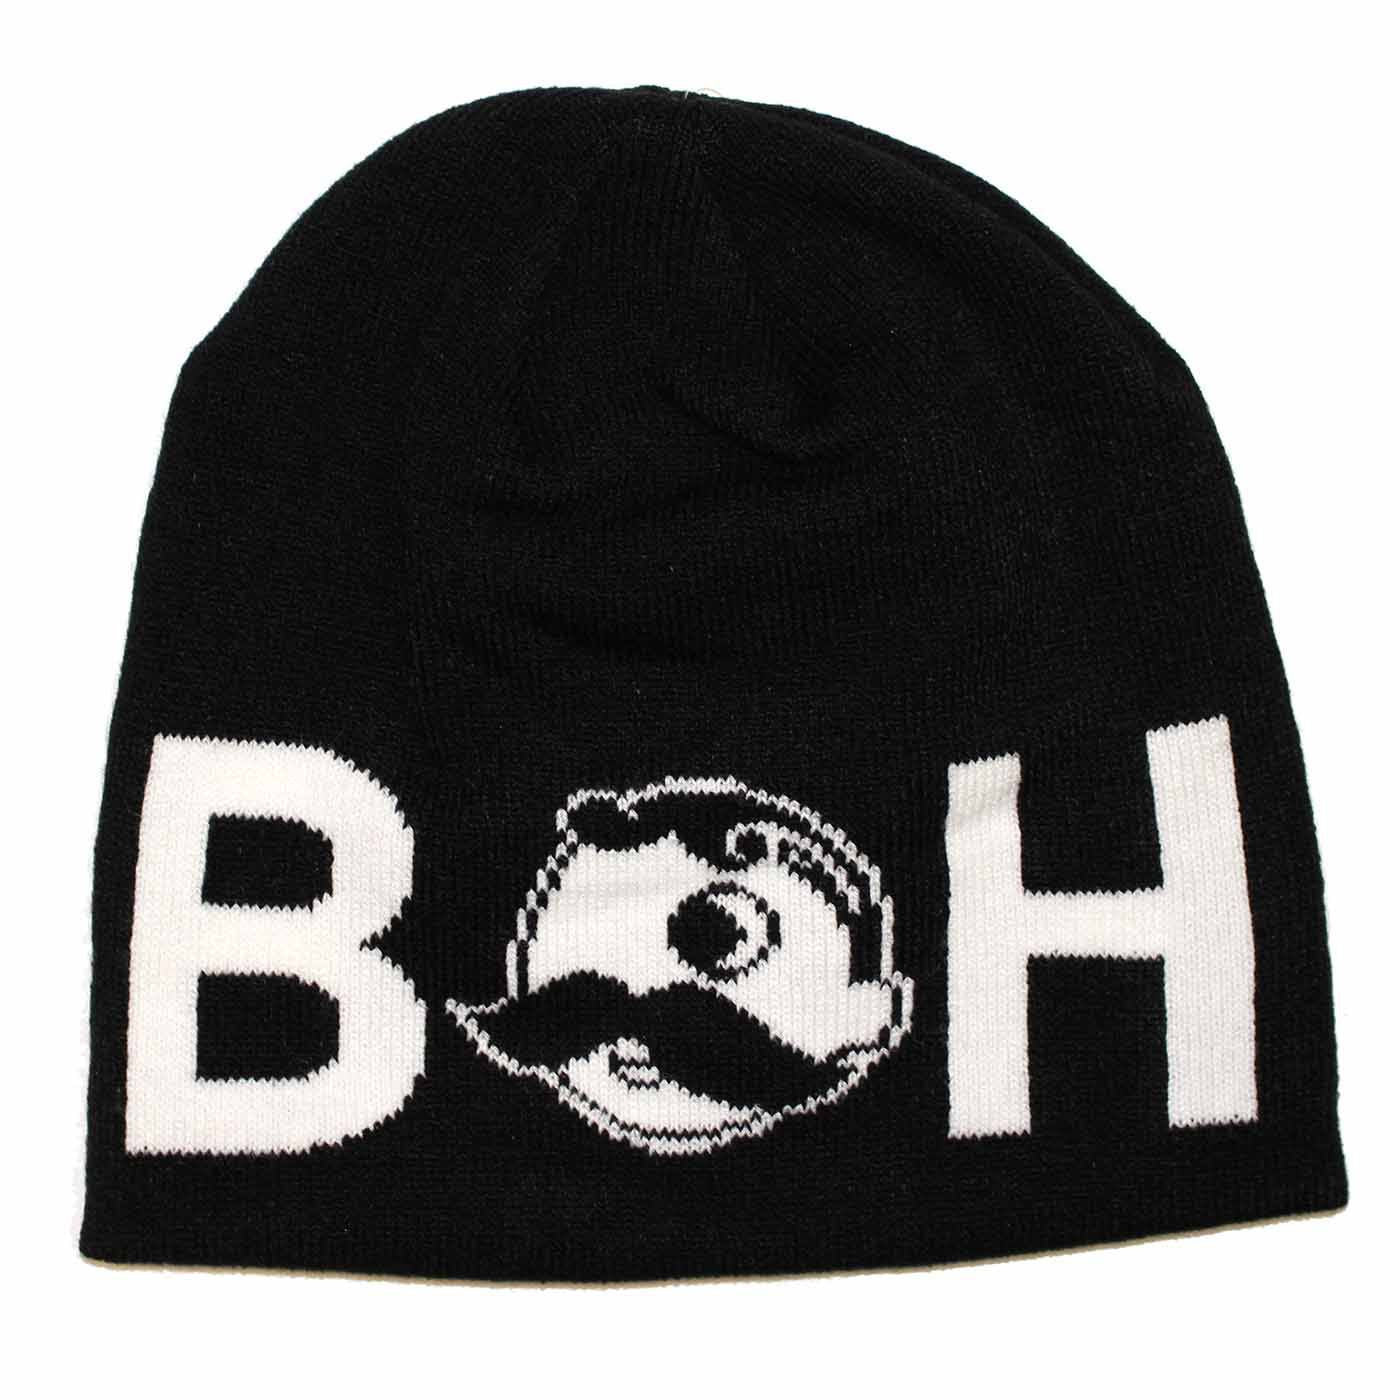 Basic Boh Logo Text (Black) / Knit Beanie Cap - Route One Apparel